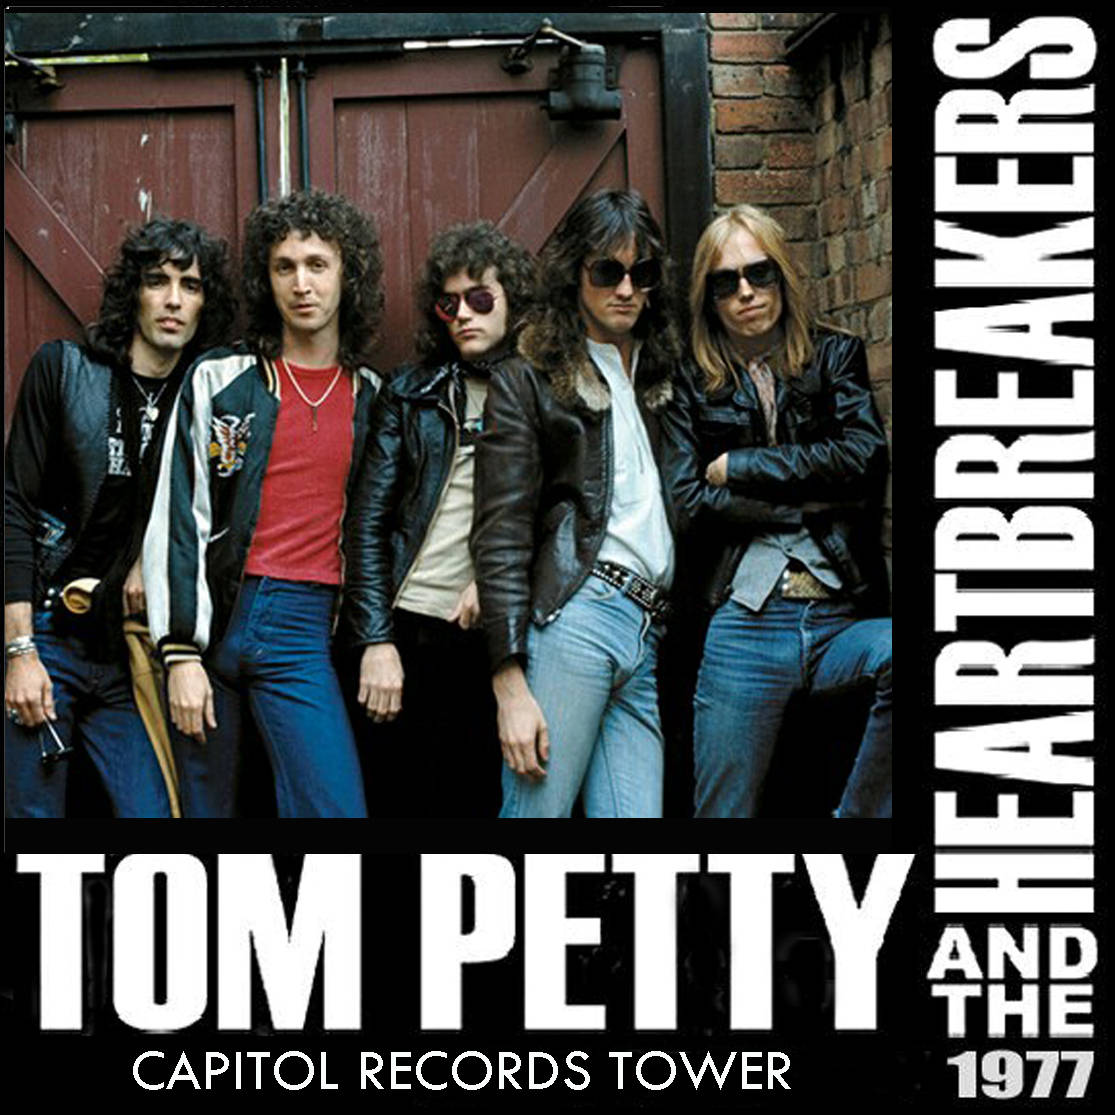 Amerikanischerockband Tom Petty And The Heartbreakers, Album Von 1977 Wallpaper